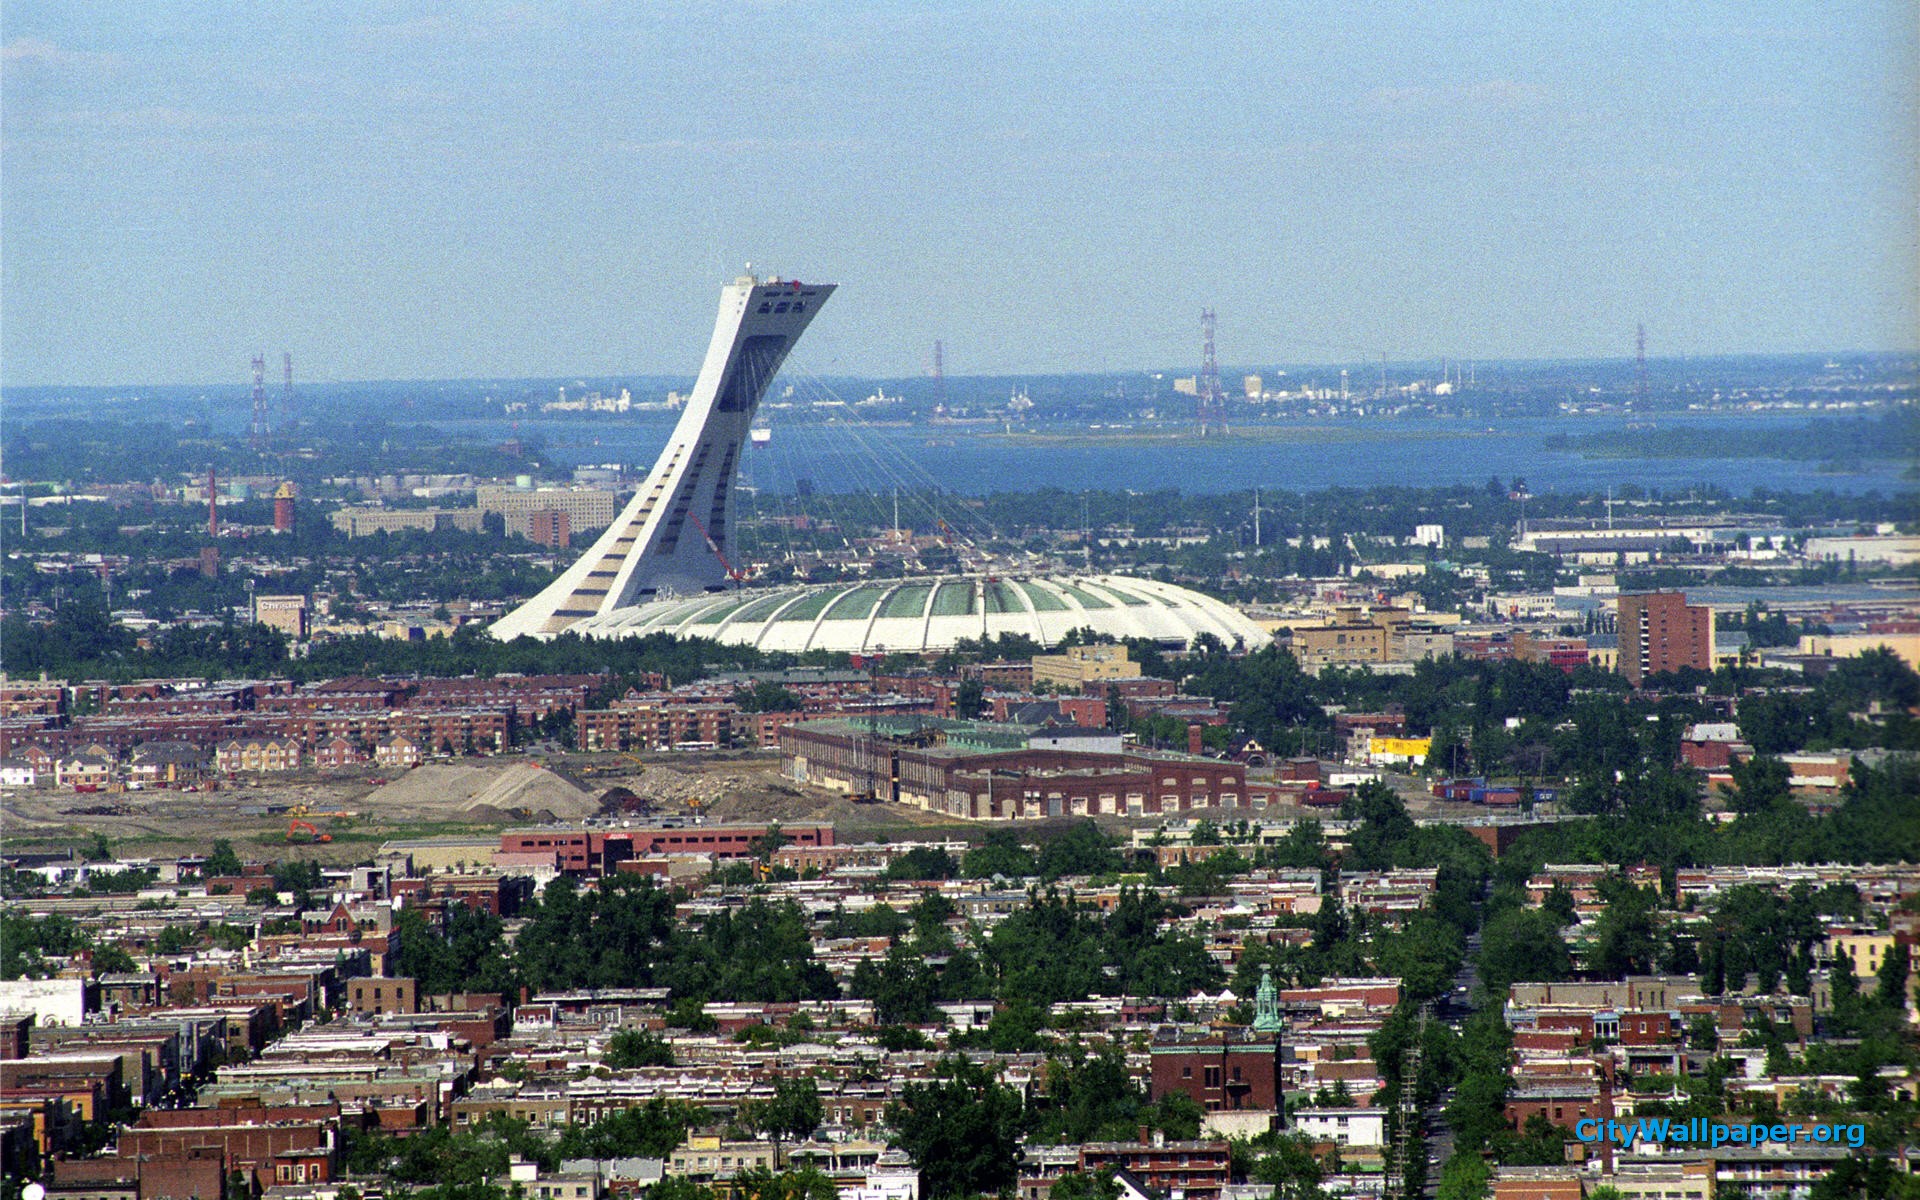 Olympic Stadium Montreal Wallpaper